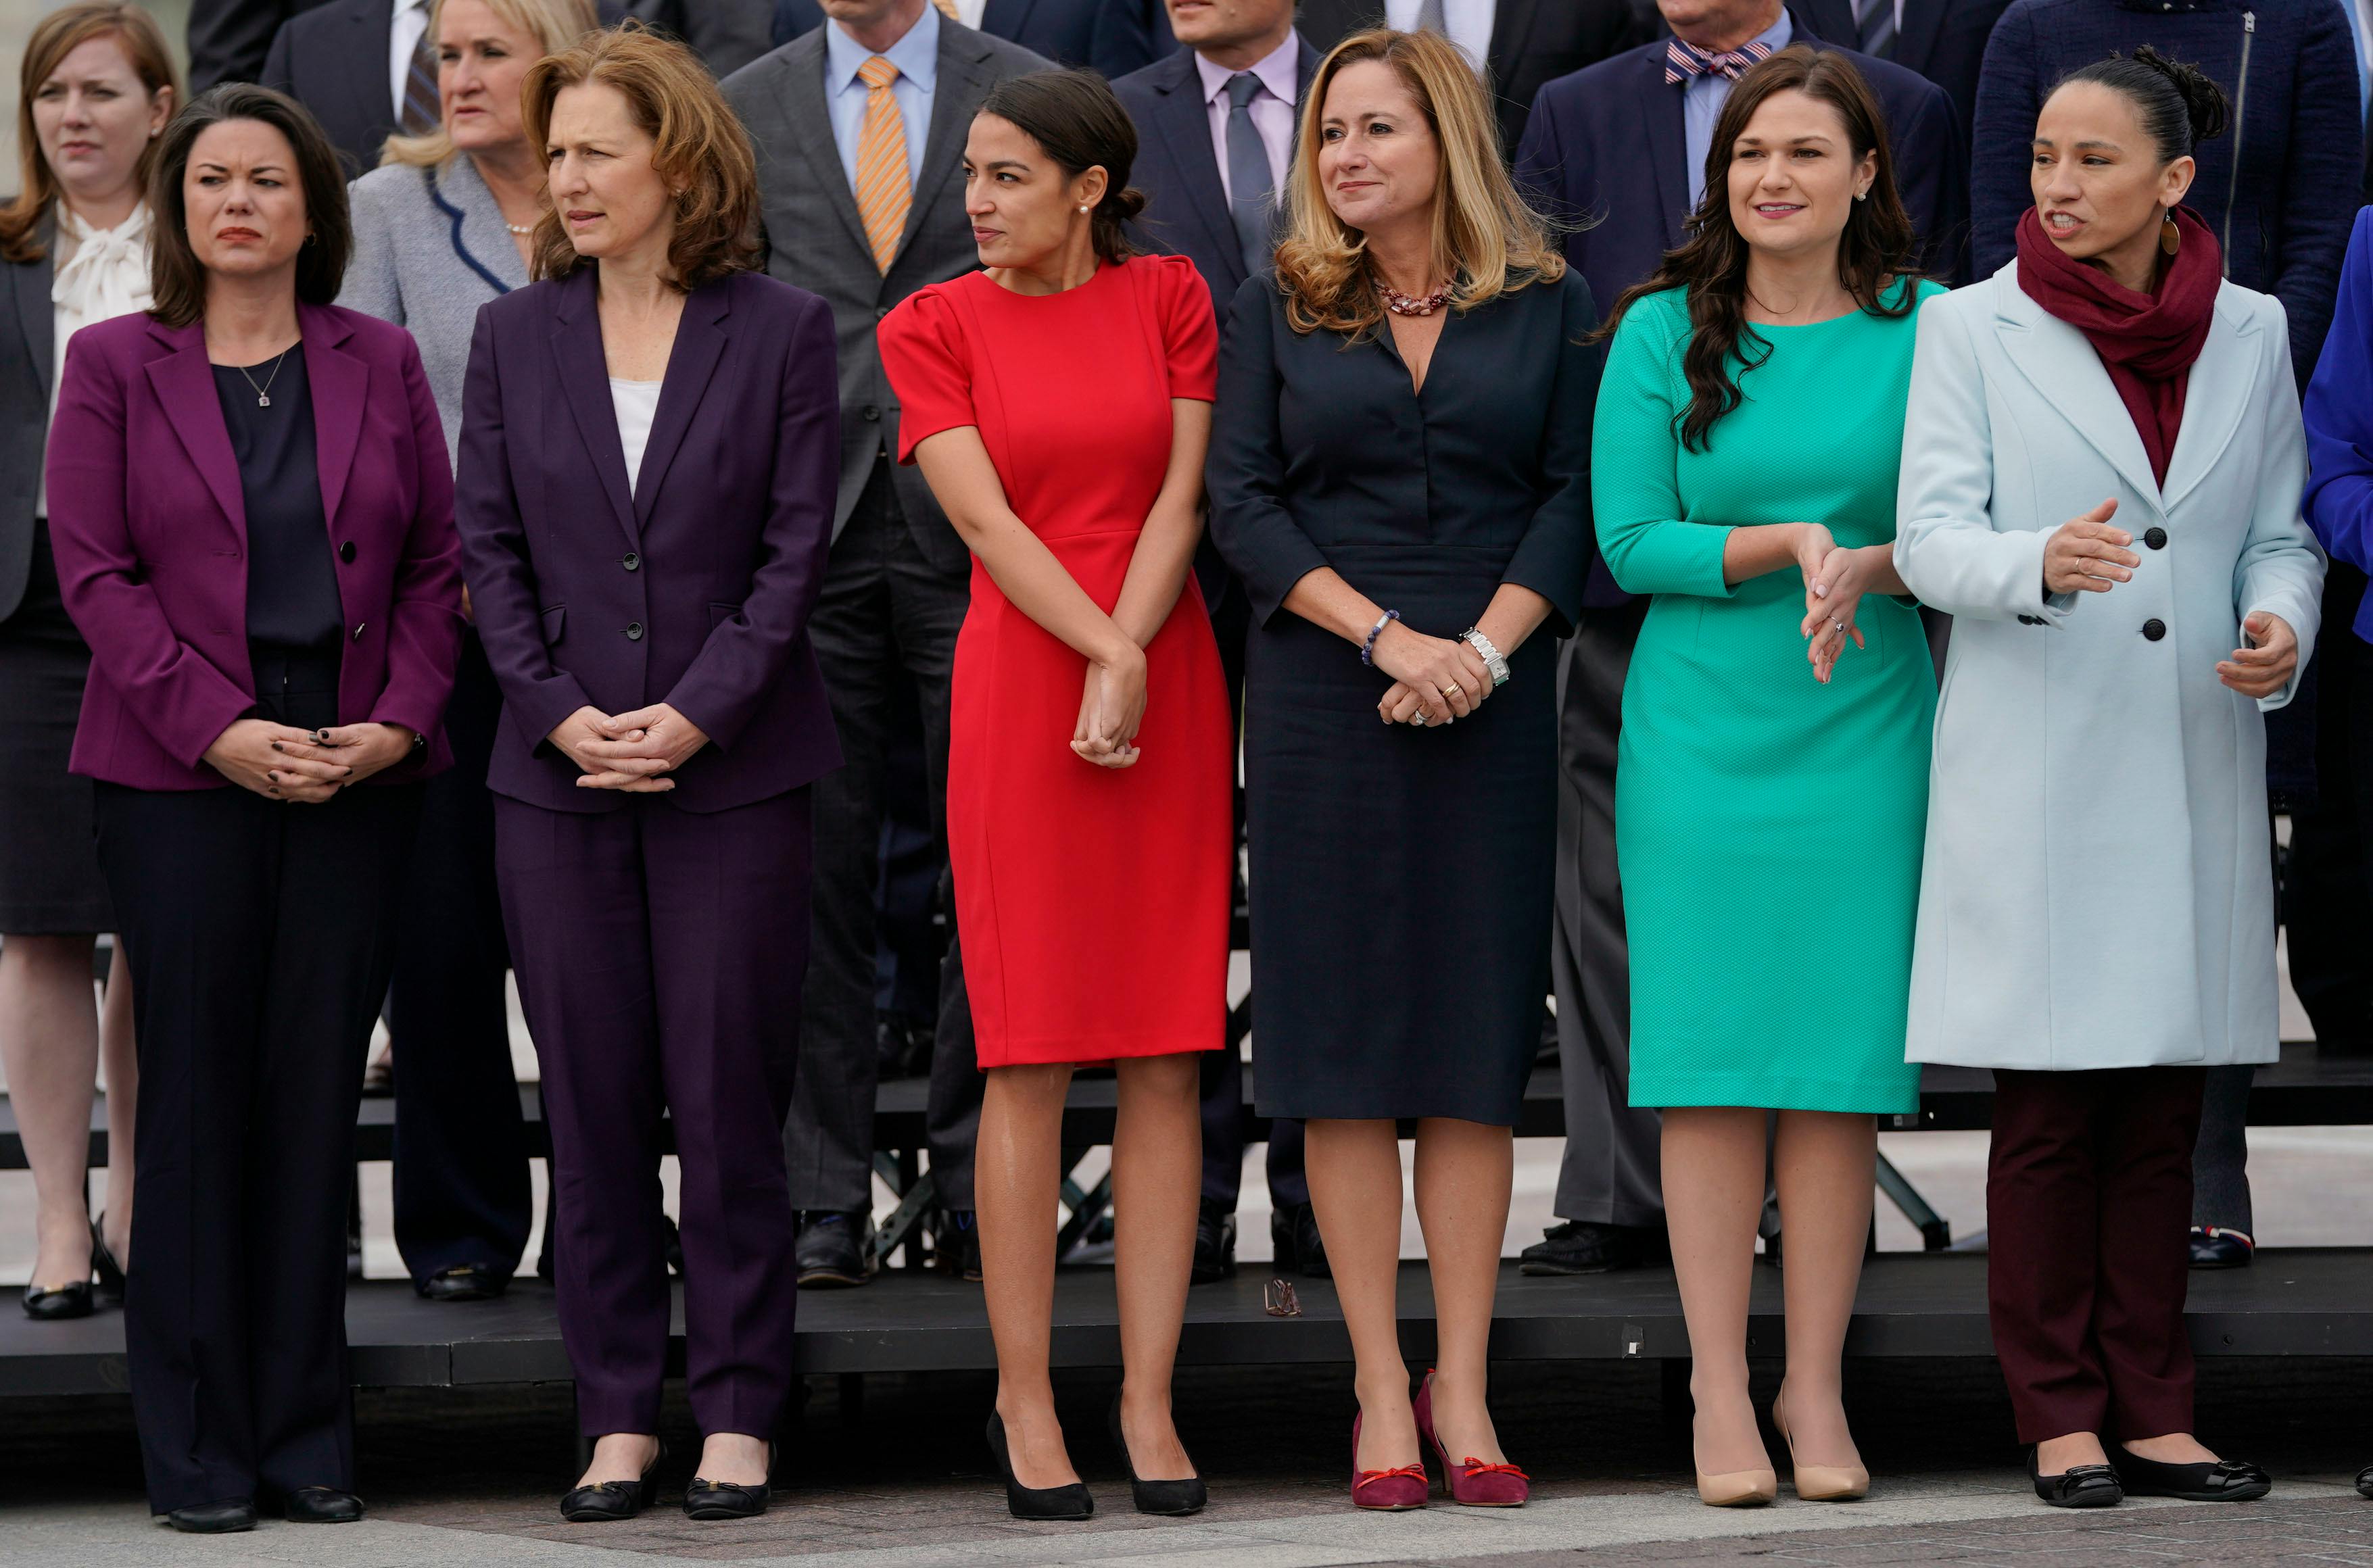 Menace grows for women in politics